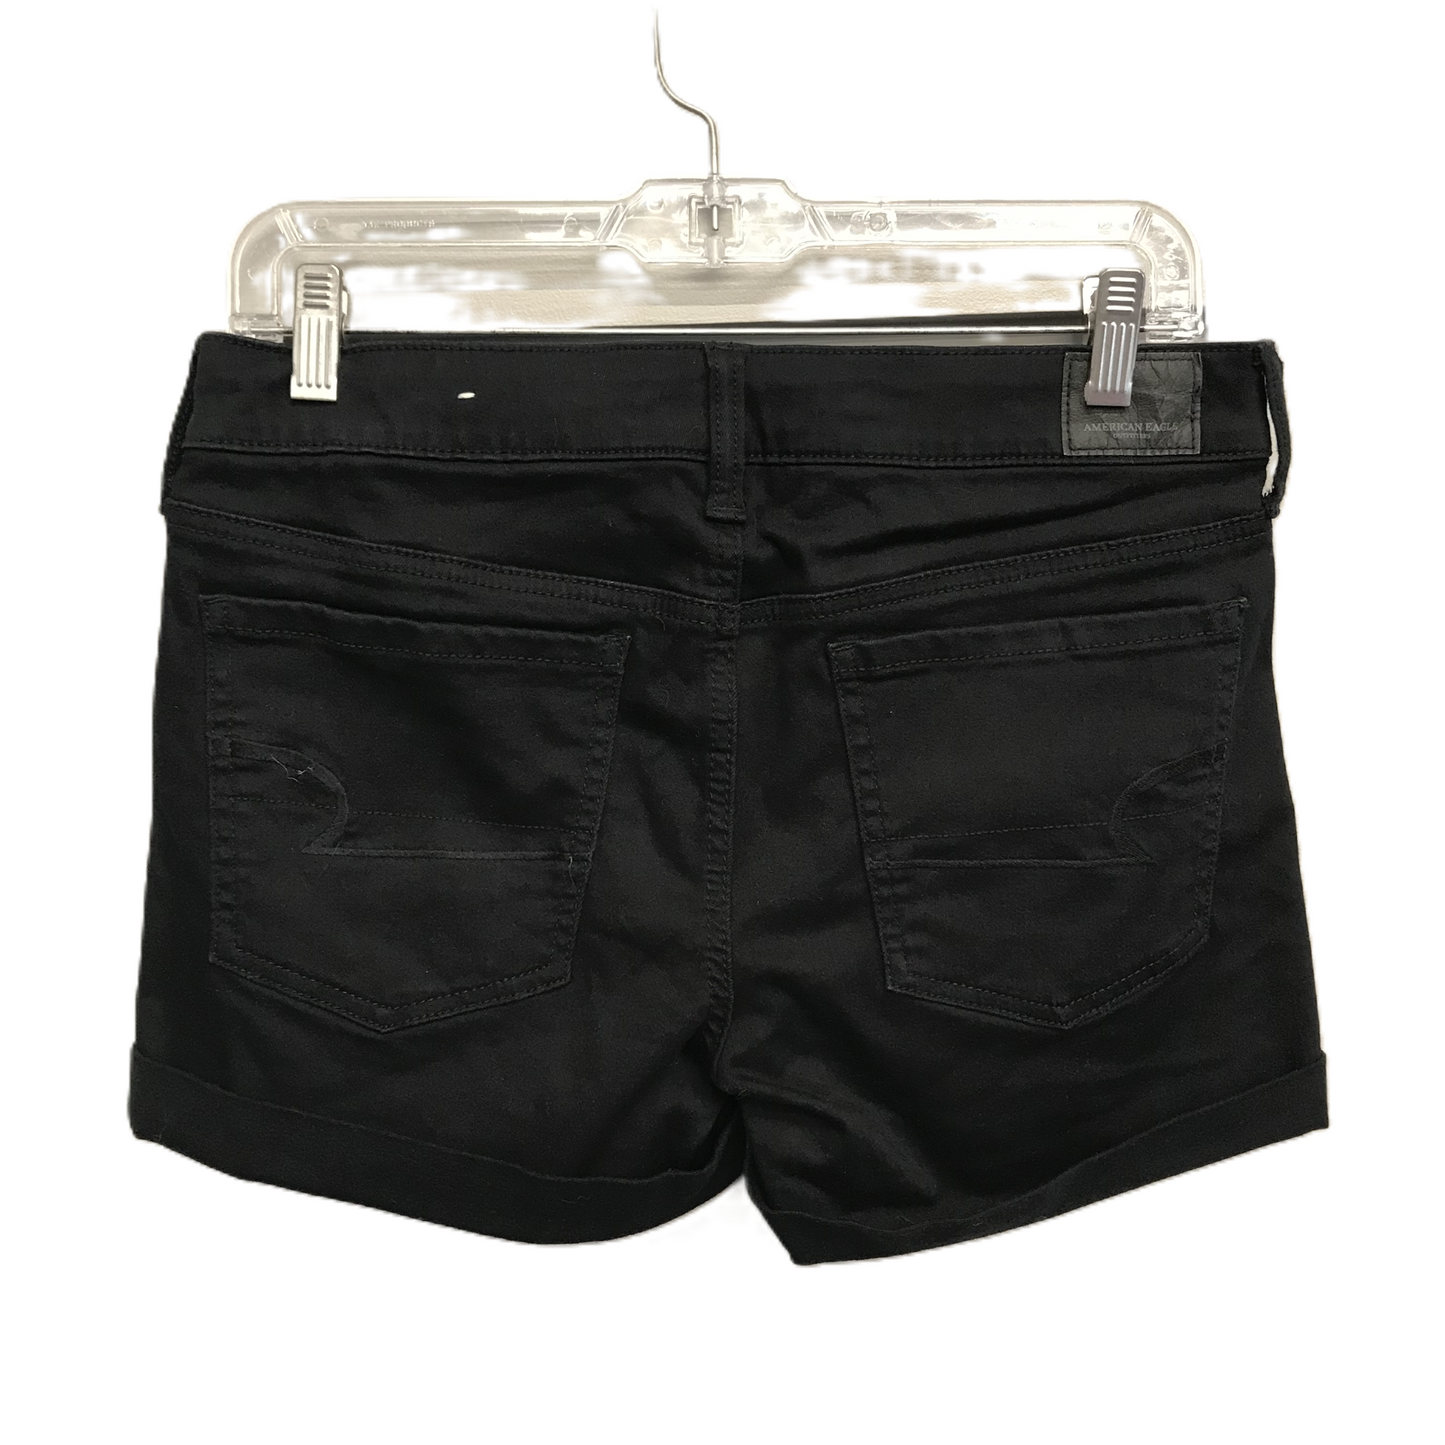 Black Denim Shorts By American Eagle, Size: 8